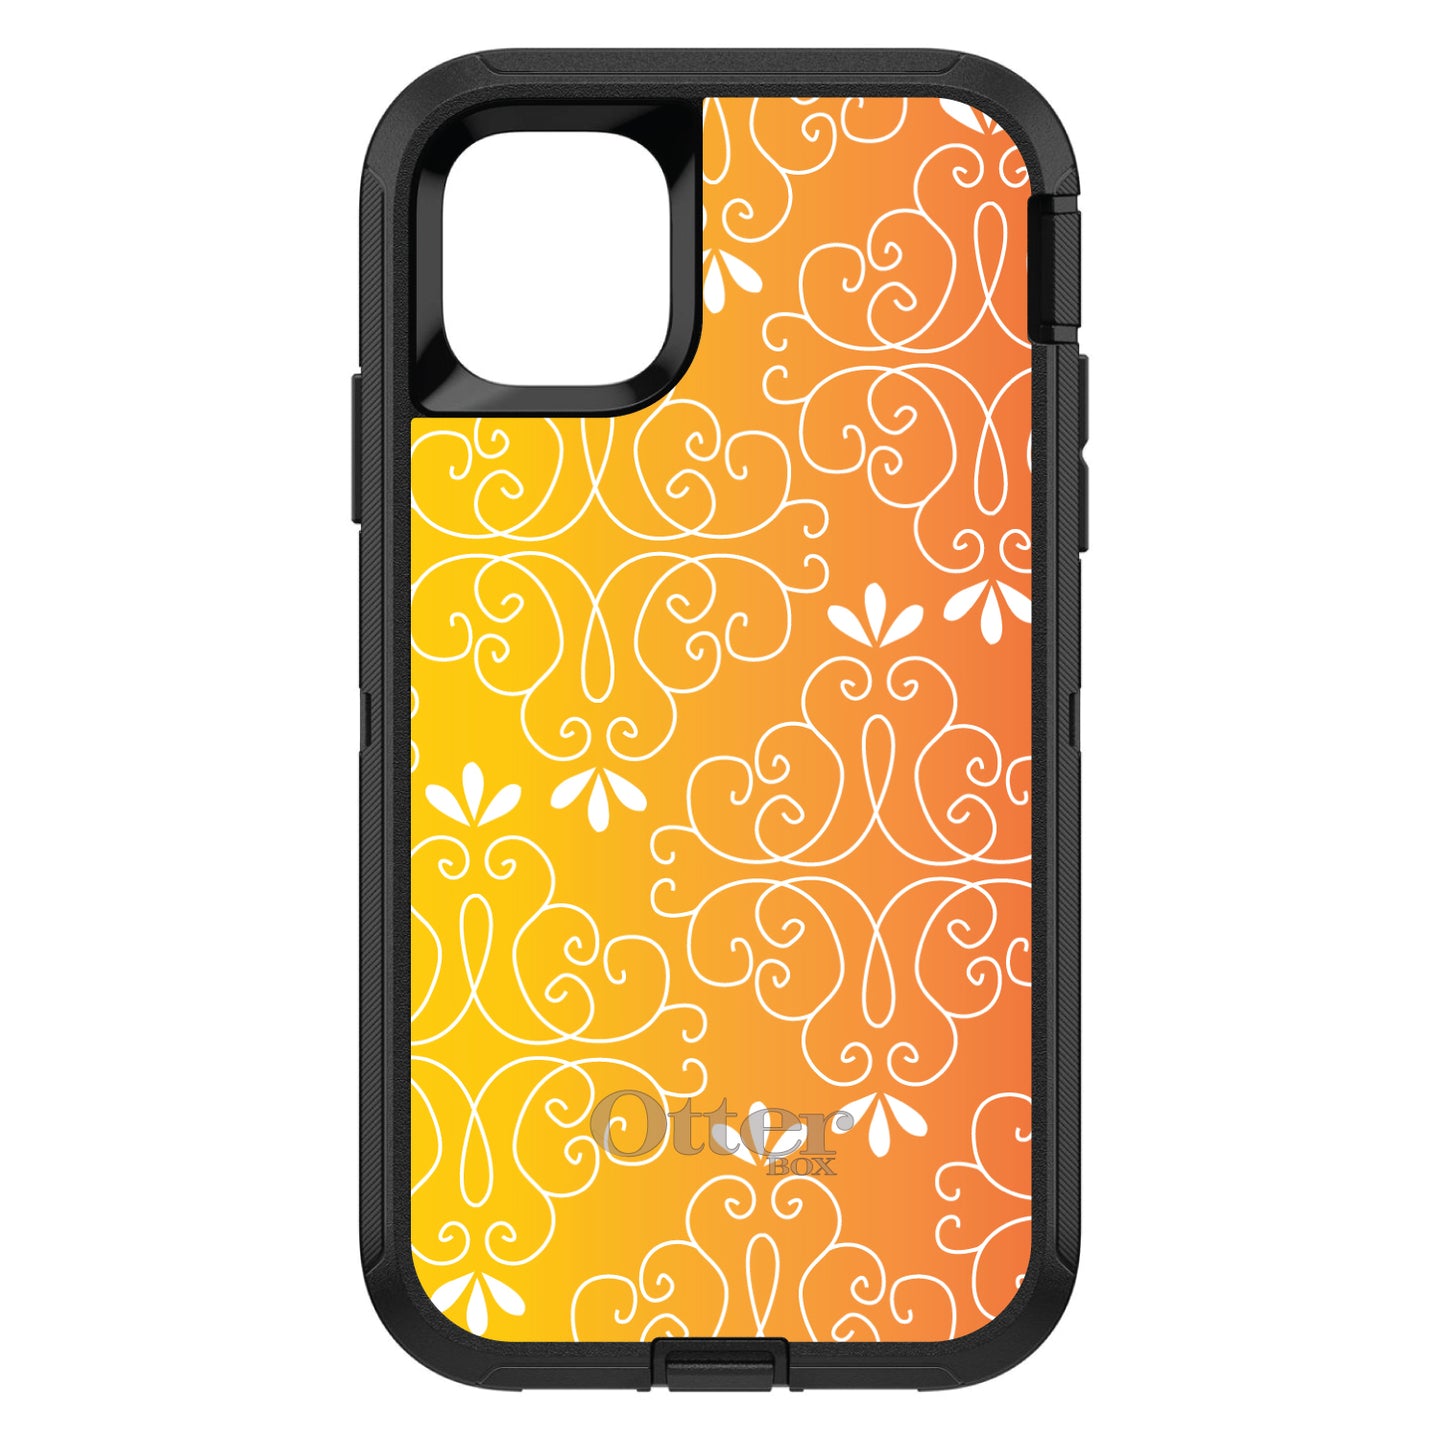 DistinctInk™ OtterBox Defender Series Case for Apple iPhone / Samsung Galaxy / Google Pixel - Yellow Orange Red Gradient